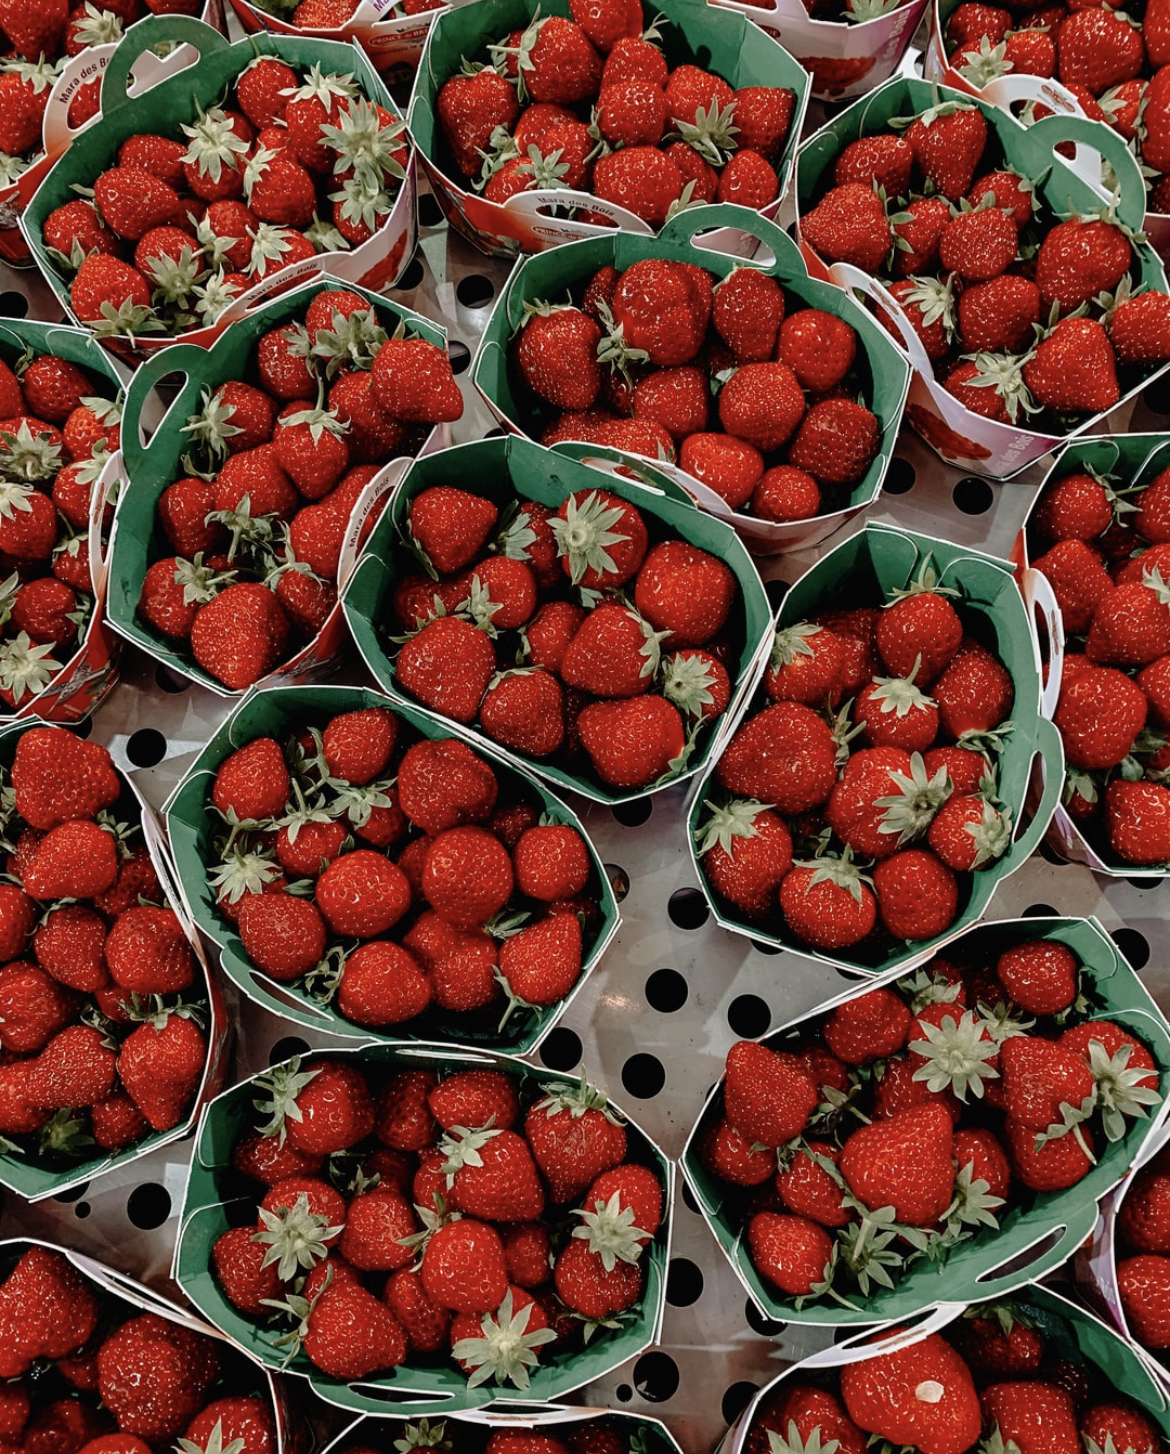 Top 5 Strawberry Farms around Raleigh, NC